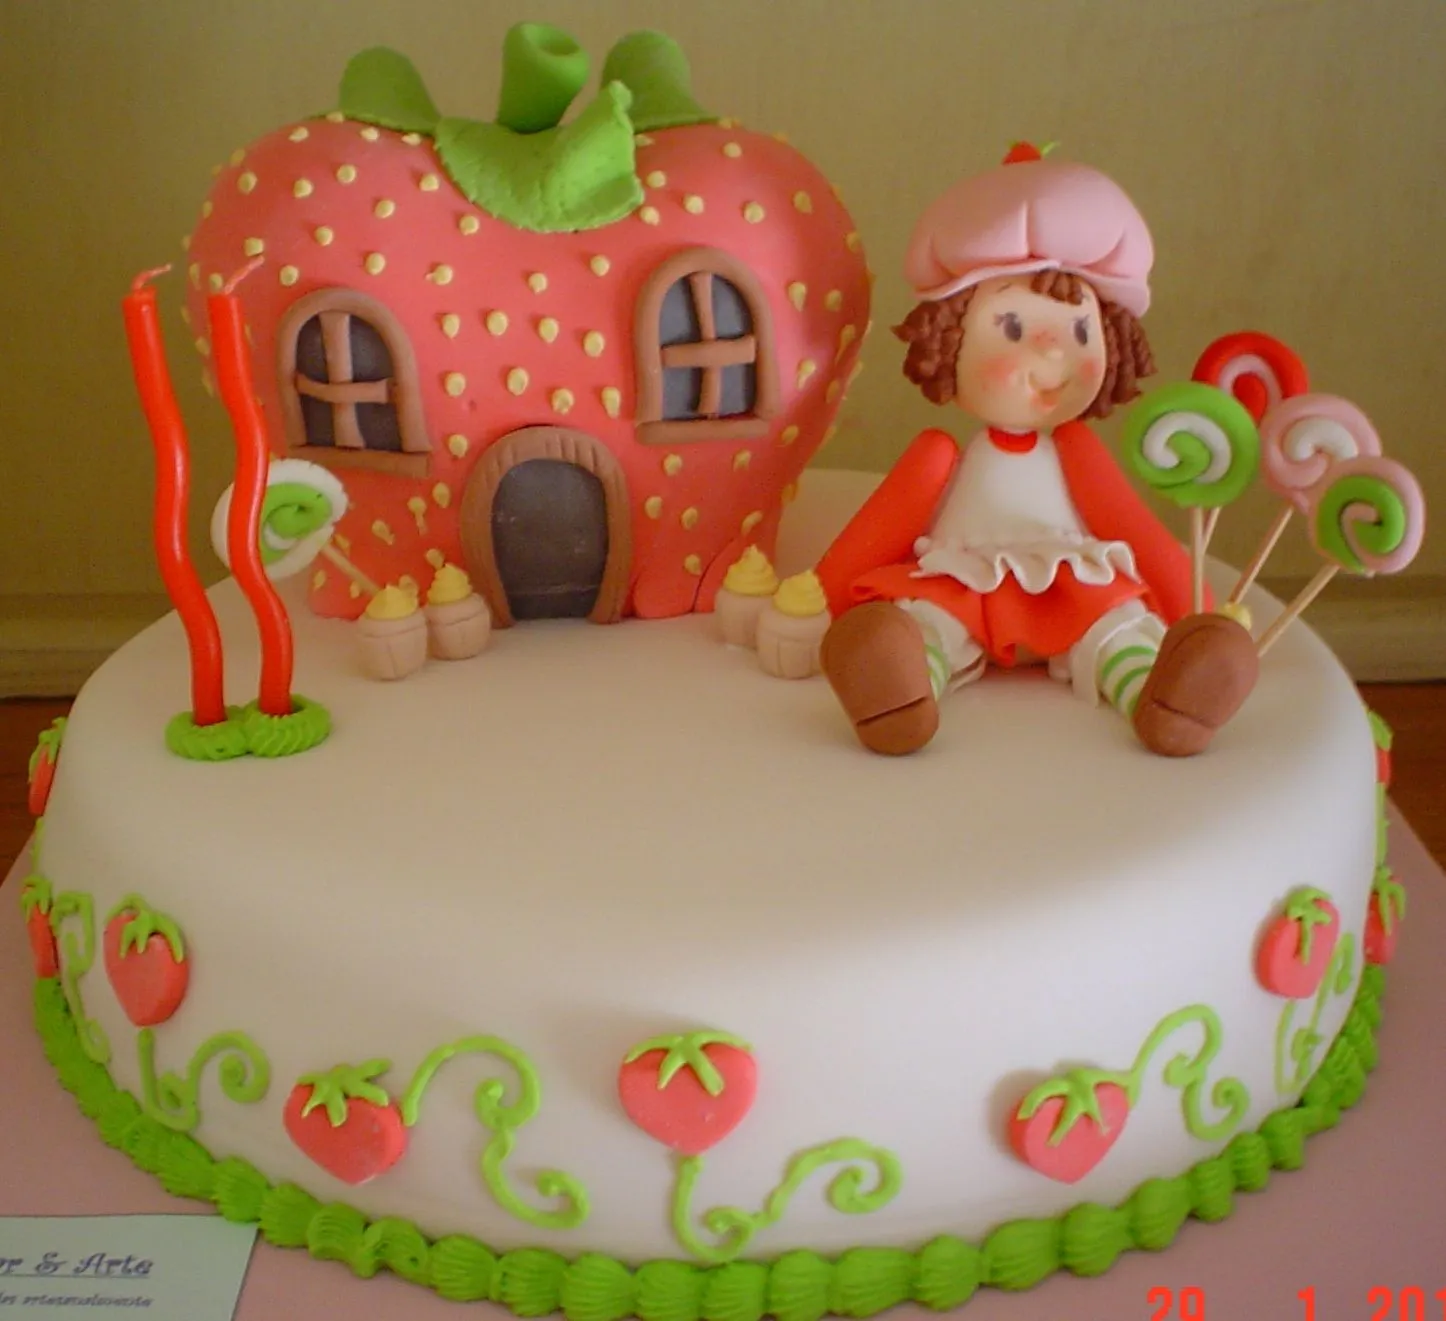  ... & Arte: Torta Frutillitas (Strawberry Shortcake, Rosita Fresita